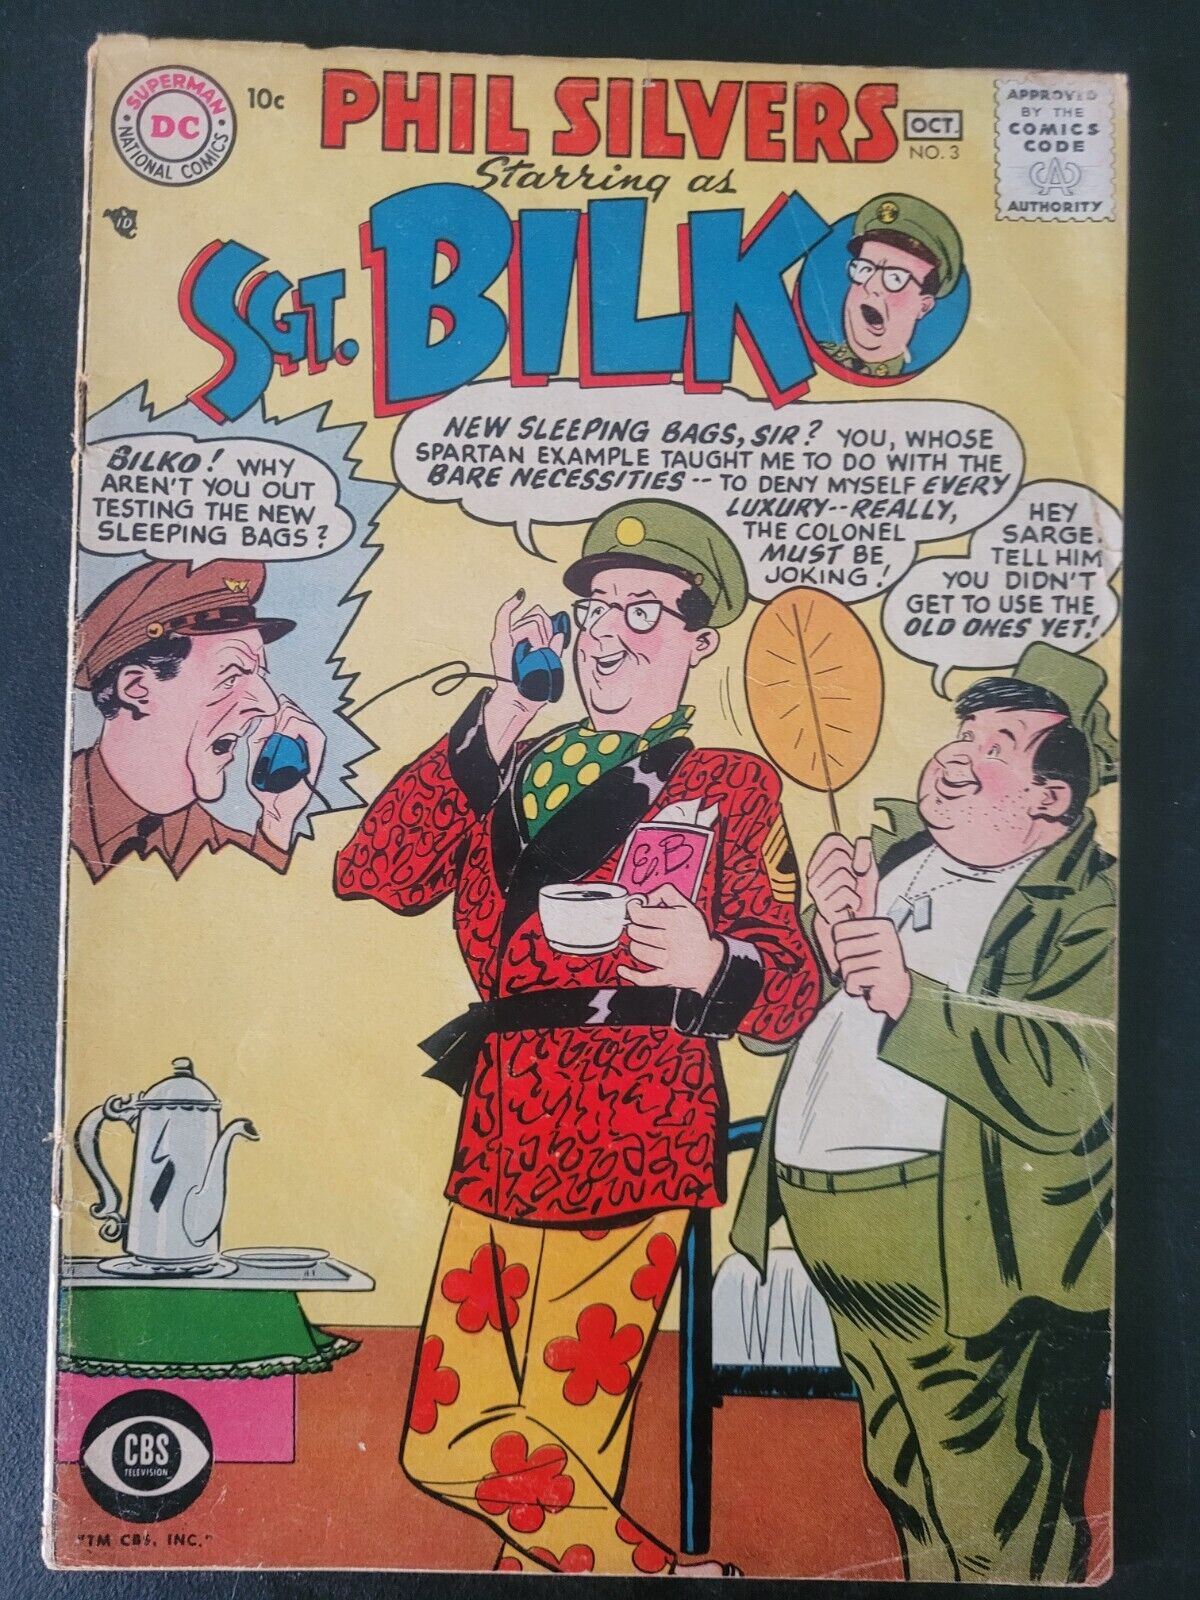 PHIL SILVERS Starring in SGT. BILKO #3 (1957) DC COMICS SILVER AGE HUMOR WAR